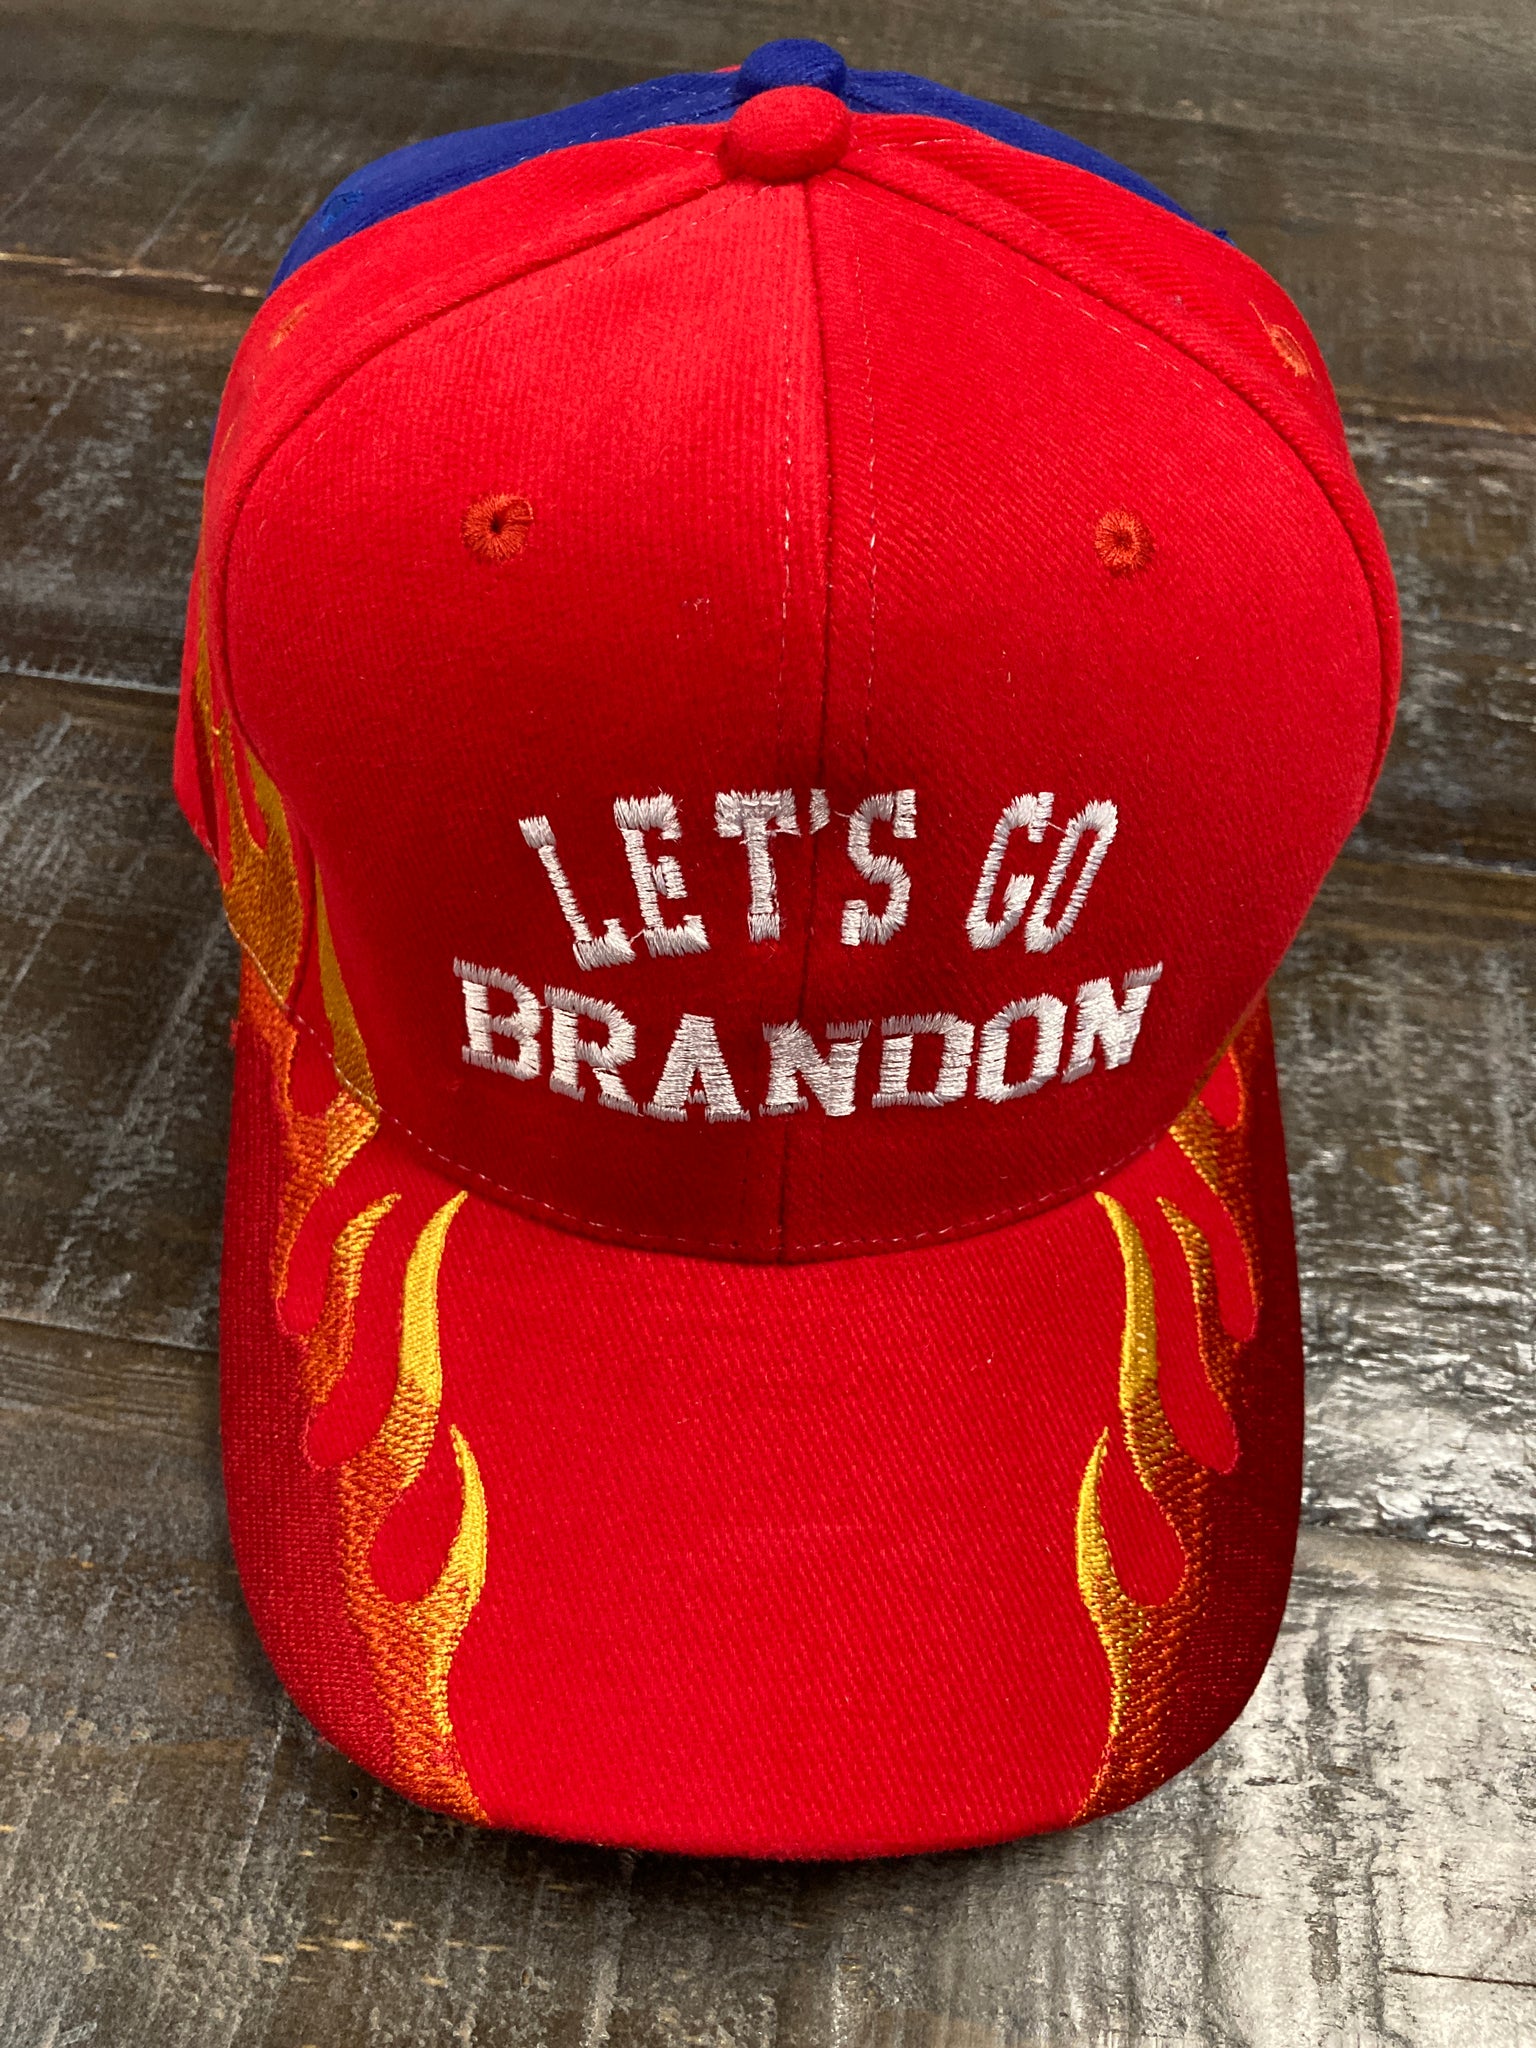 "Let's Go Brandon!" Hat w/ Flames (6 Color Variations)